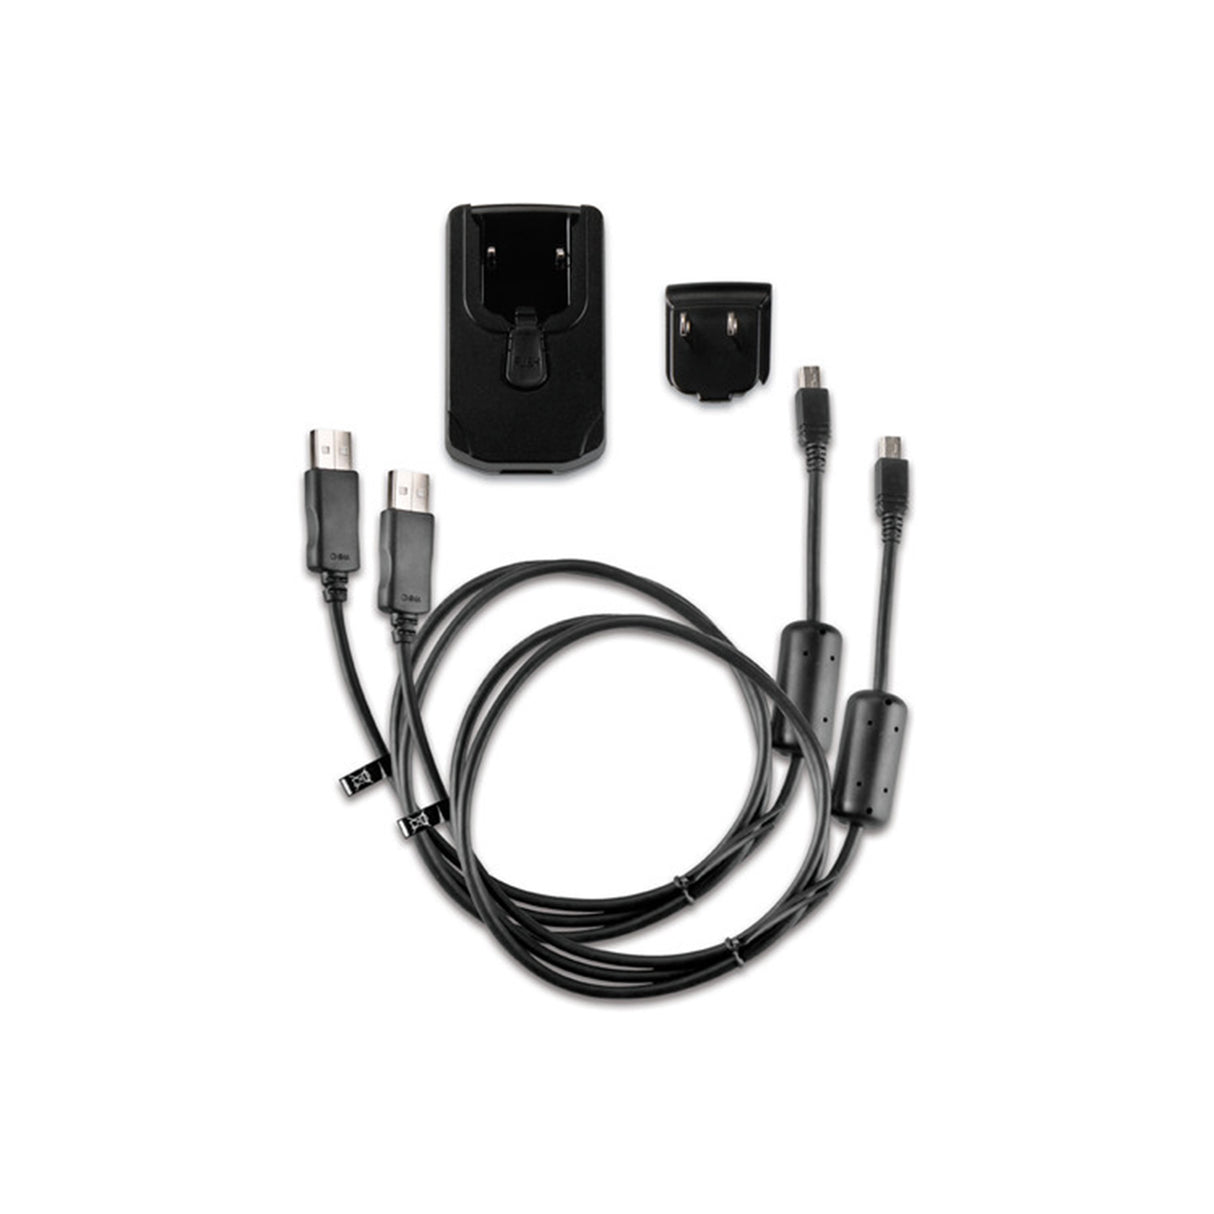 Garmin AC Adapter Cable Kit